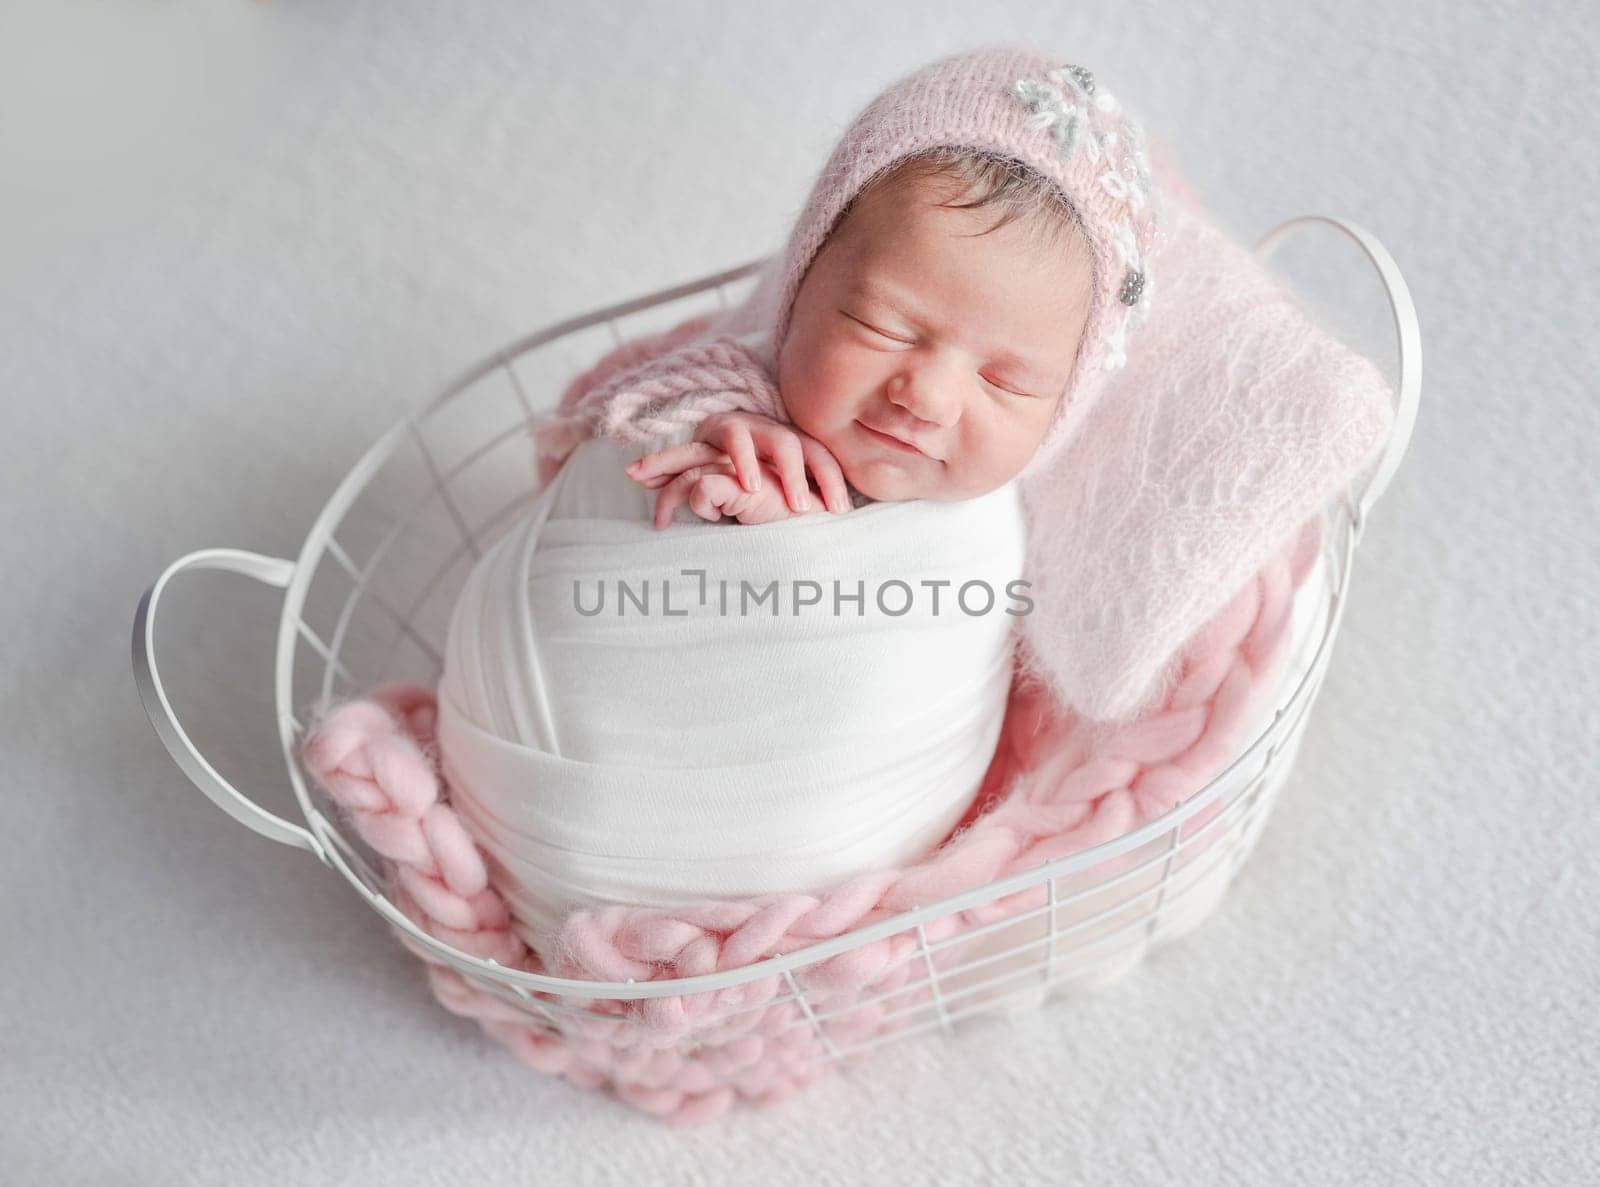 Newborn Girl Sleeps With Smile In Basket by tan4ikk1